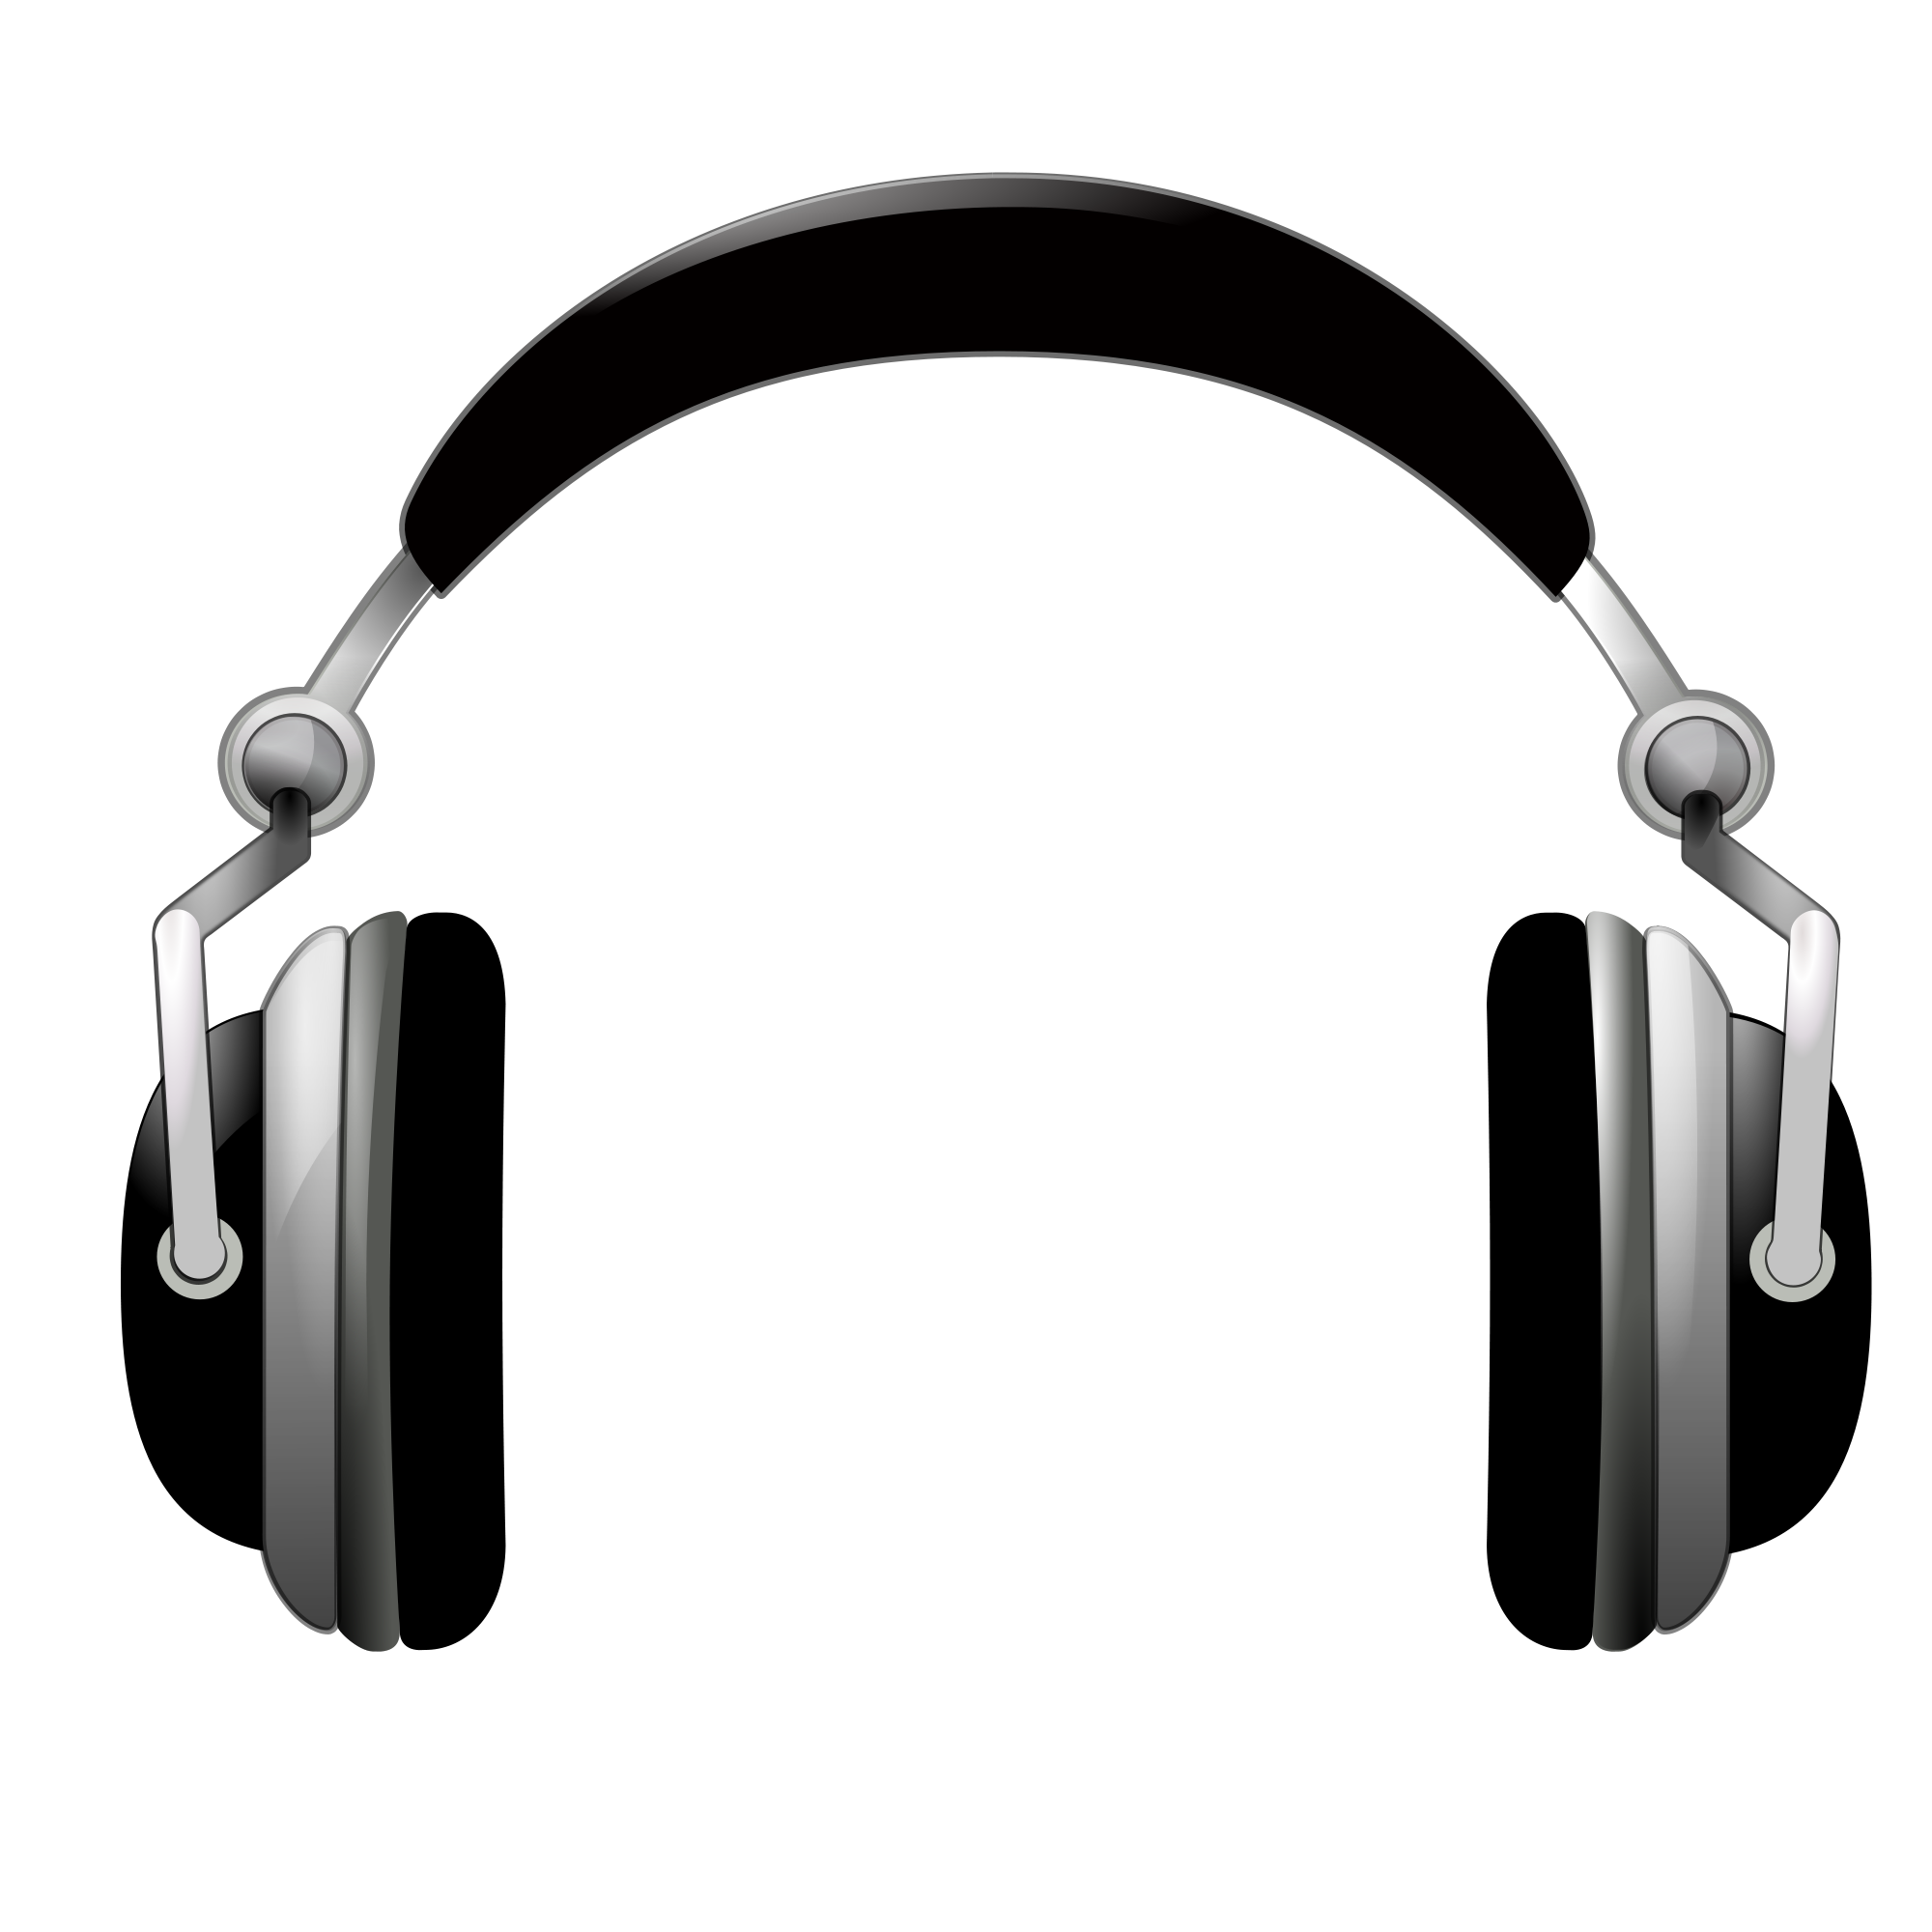 Headphones clipart transparent.